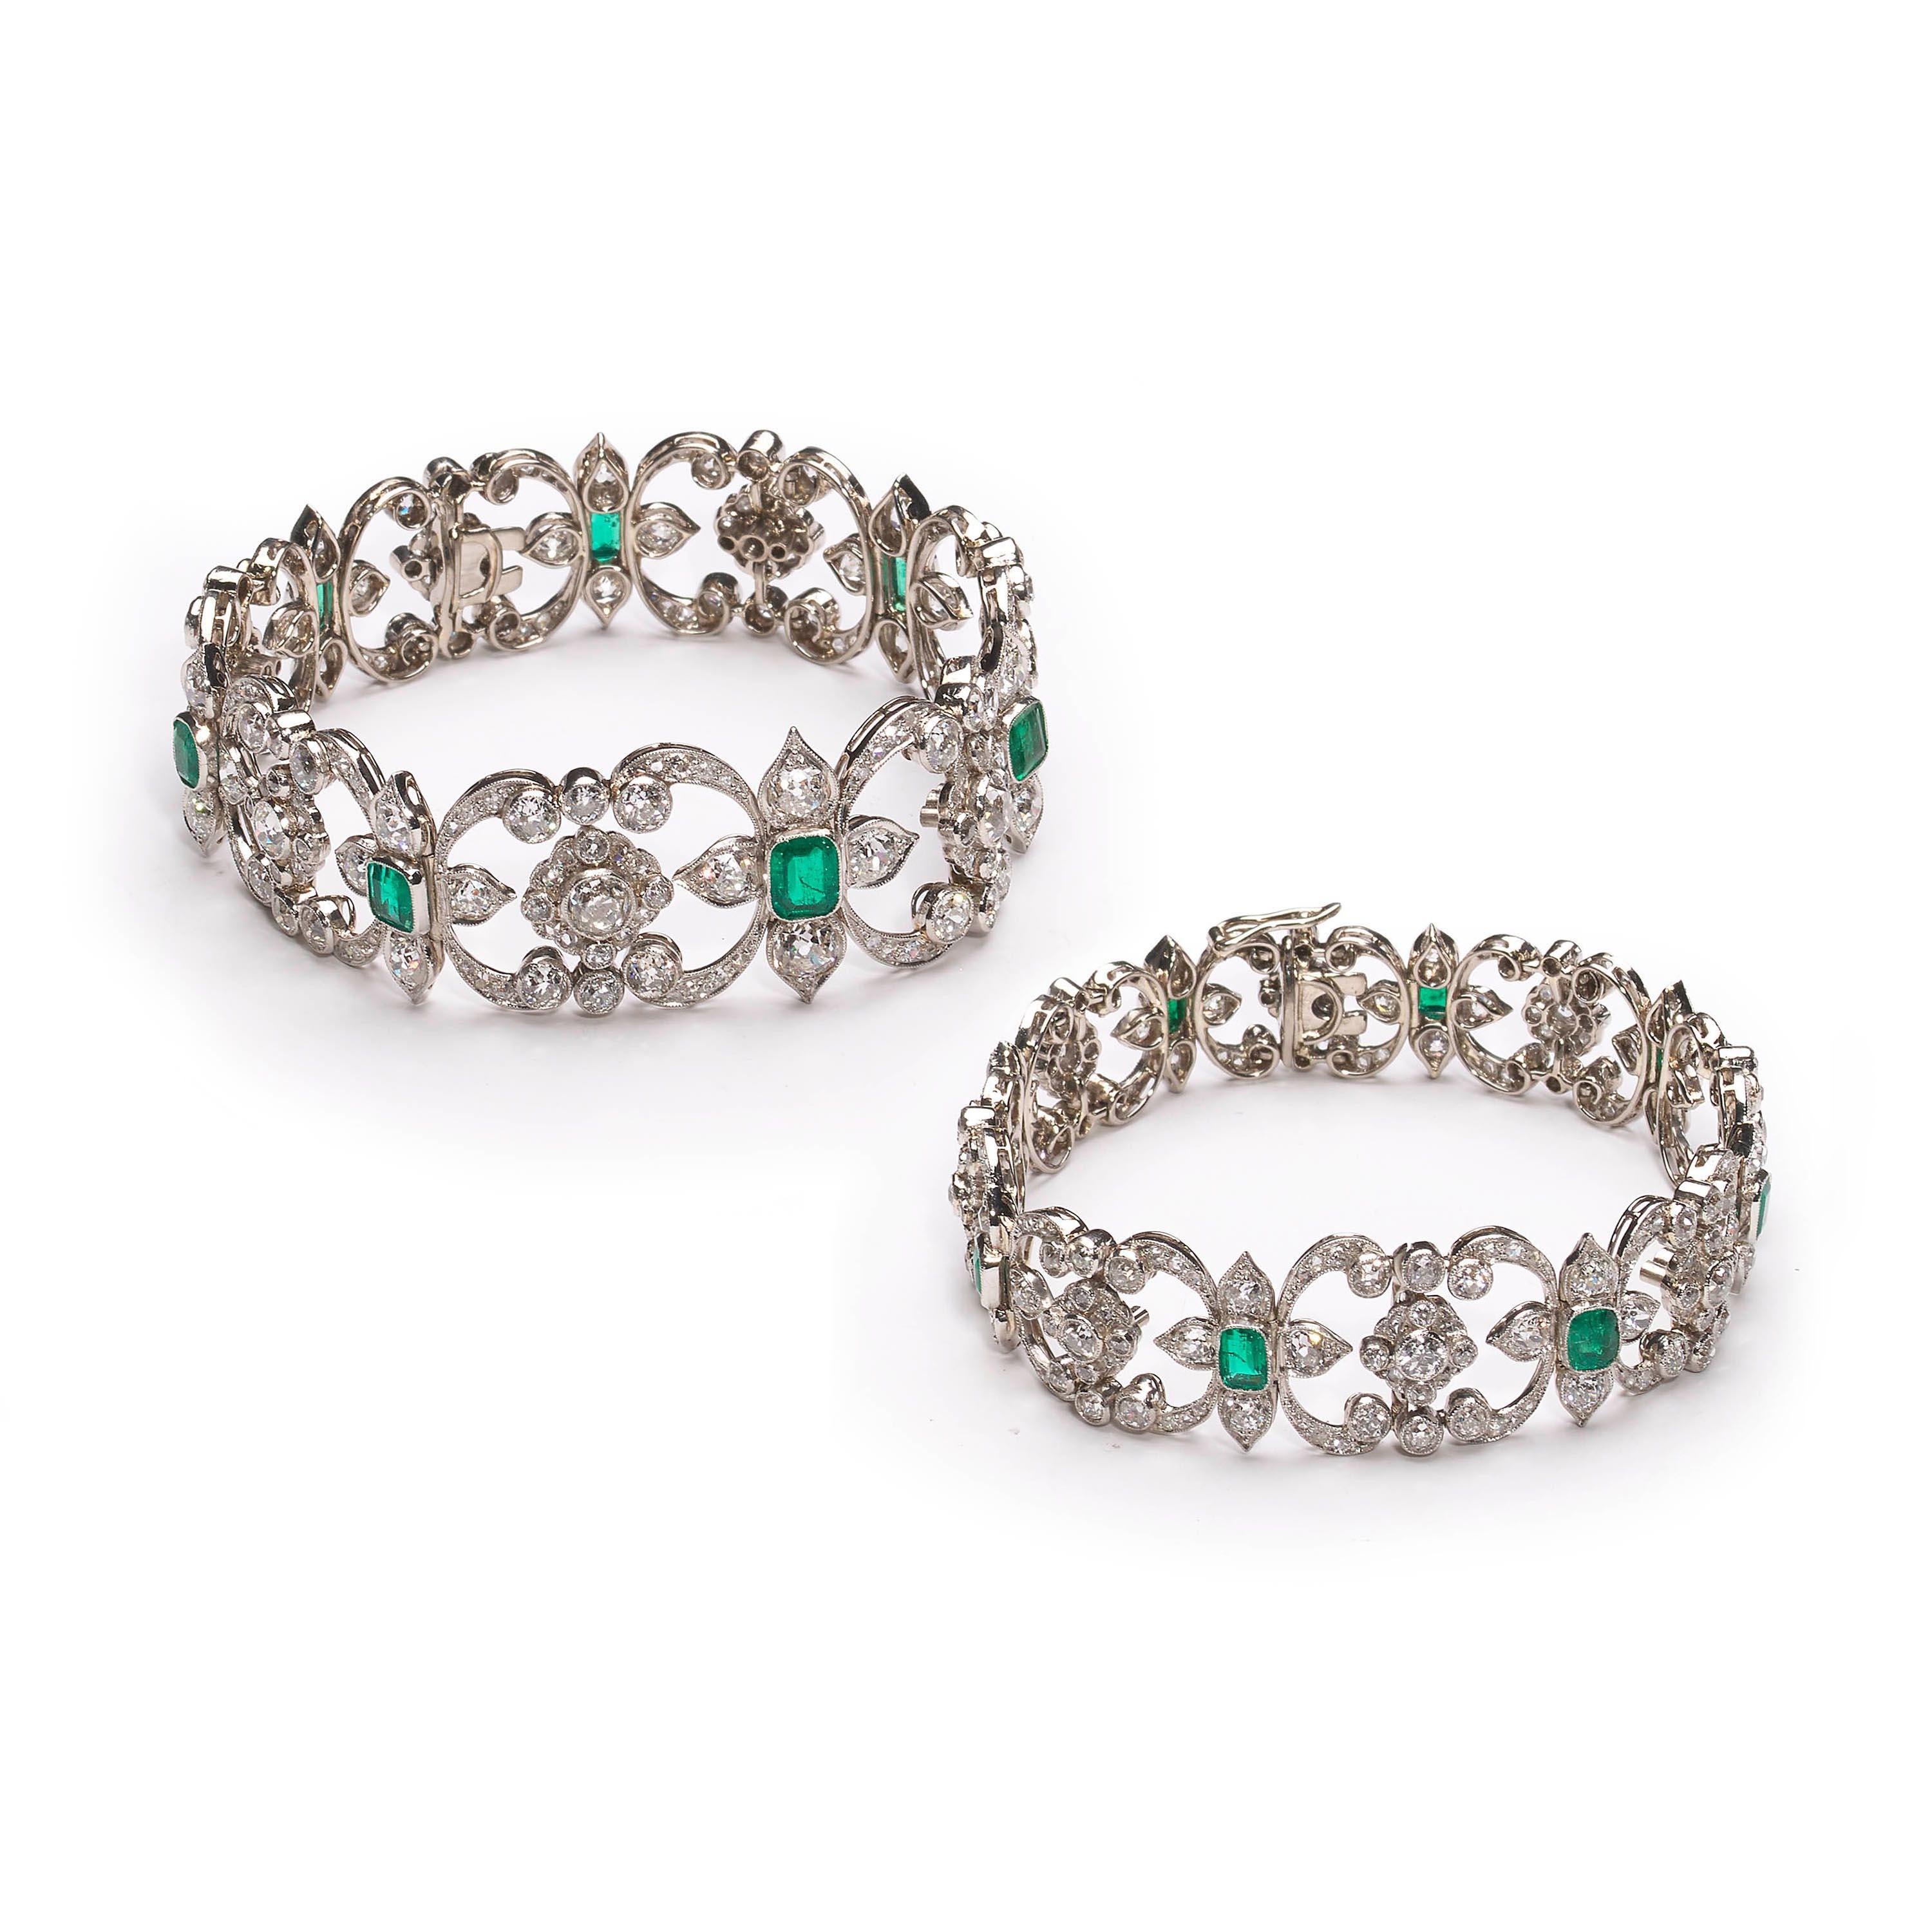 Emerald Cut Edwardian Tiara Necklace and Bracelets with Emerald, Diamond and Platinum